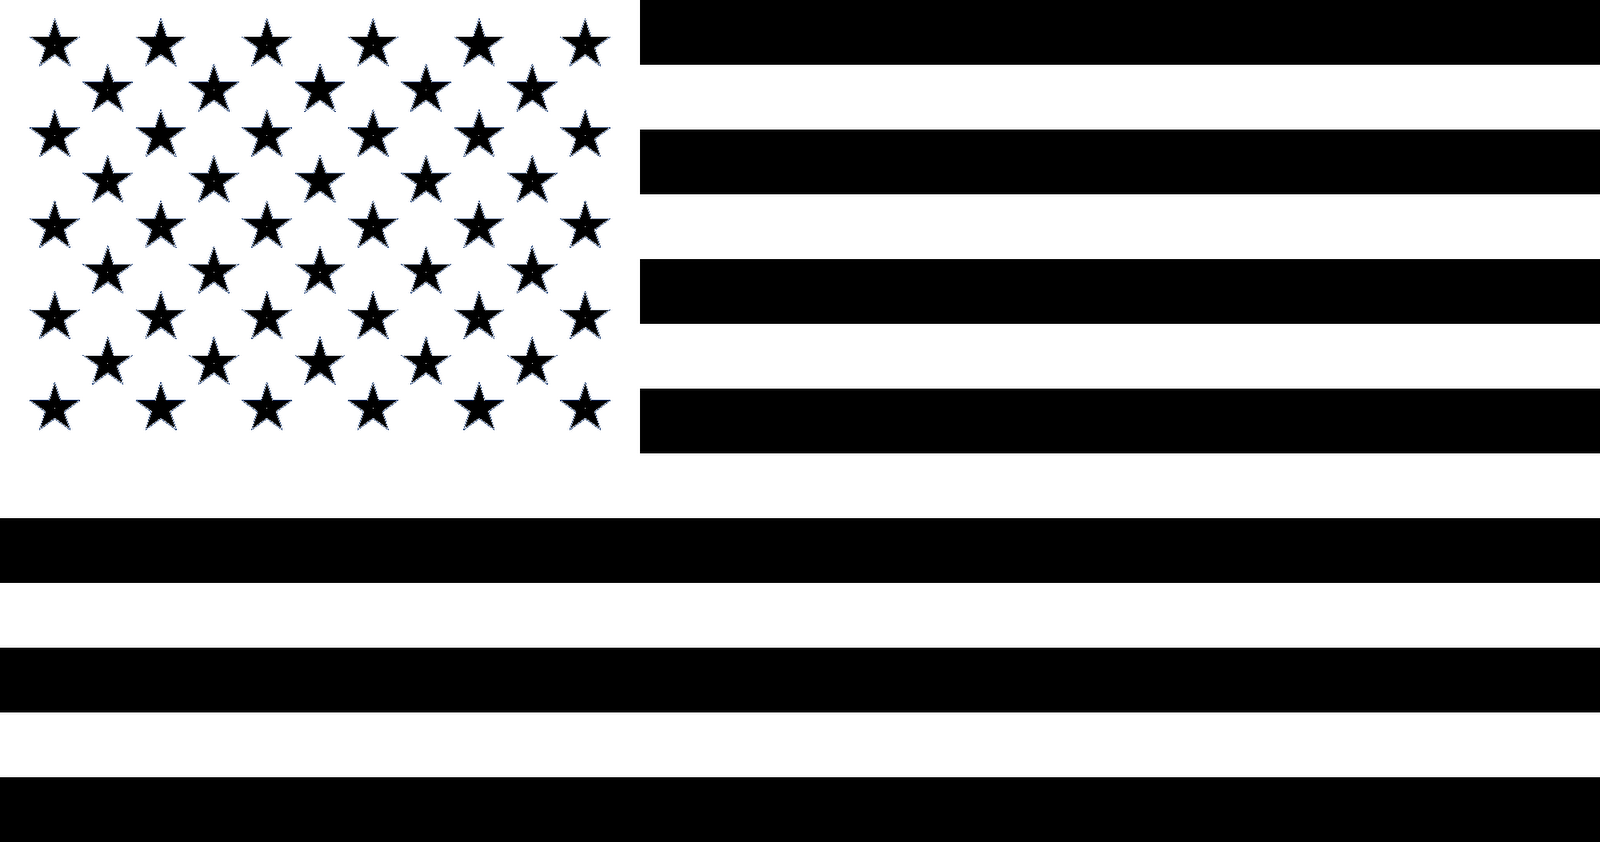 Black american flag clipart